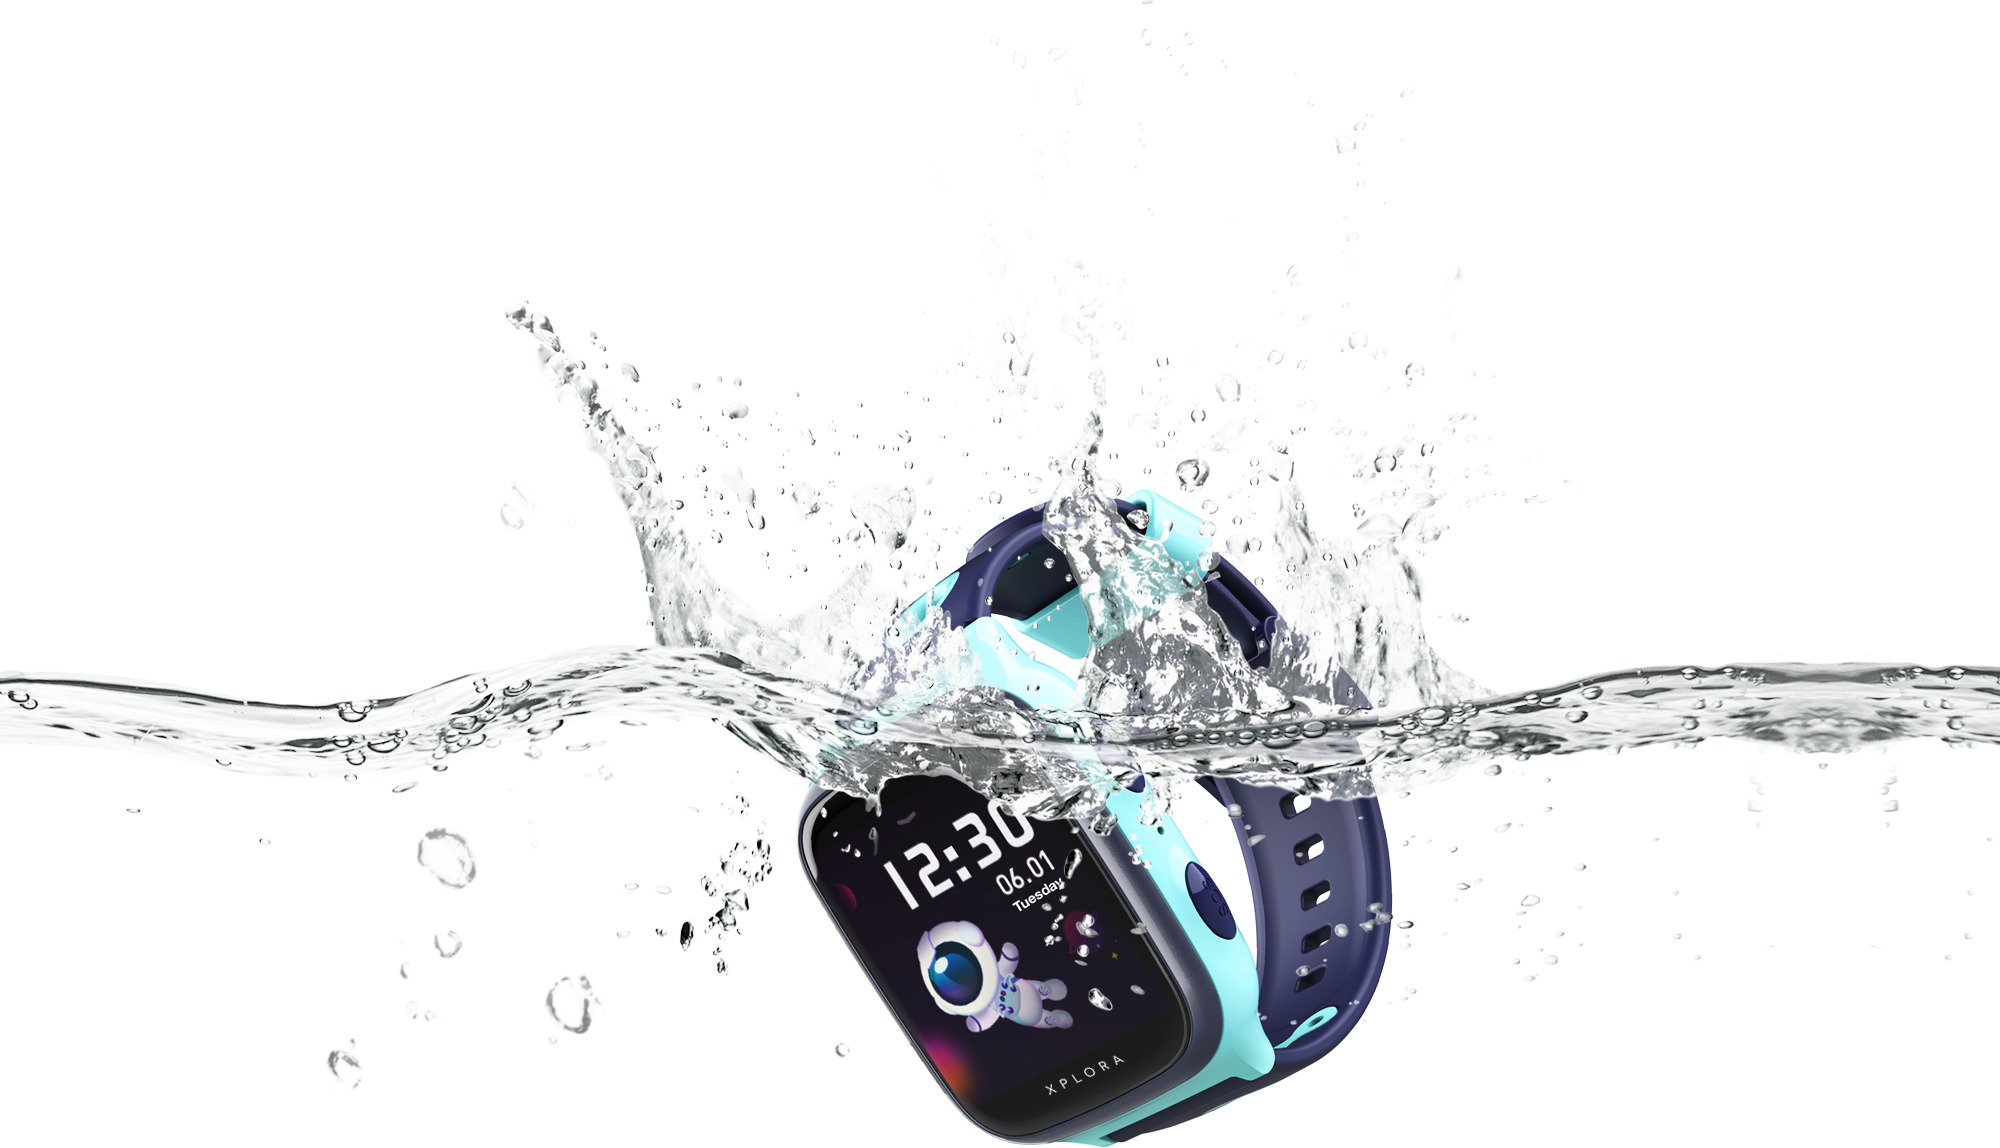 XPLORA X4 Kinder-Smartwatch Türkis Silikon, 145-210 mm